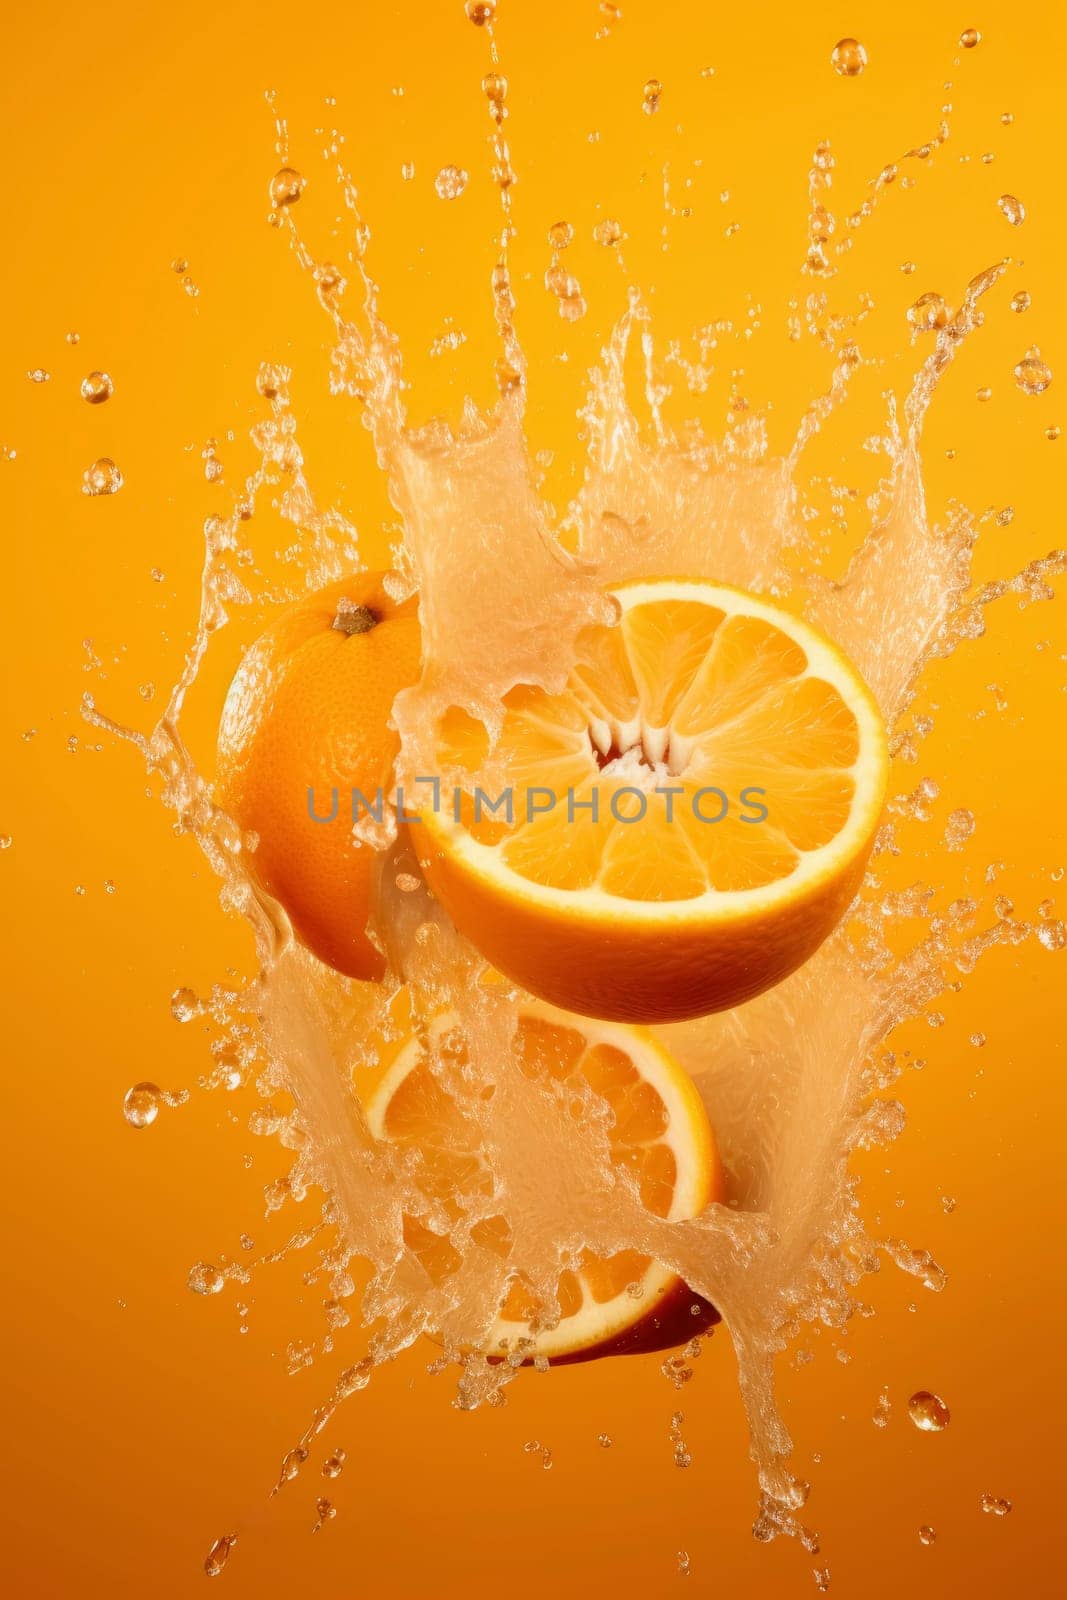 Vibrant image of orange fruit halves with a dynamic water splash against a monochromatic orange background.